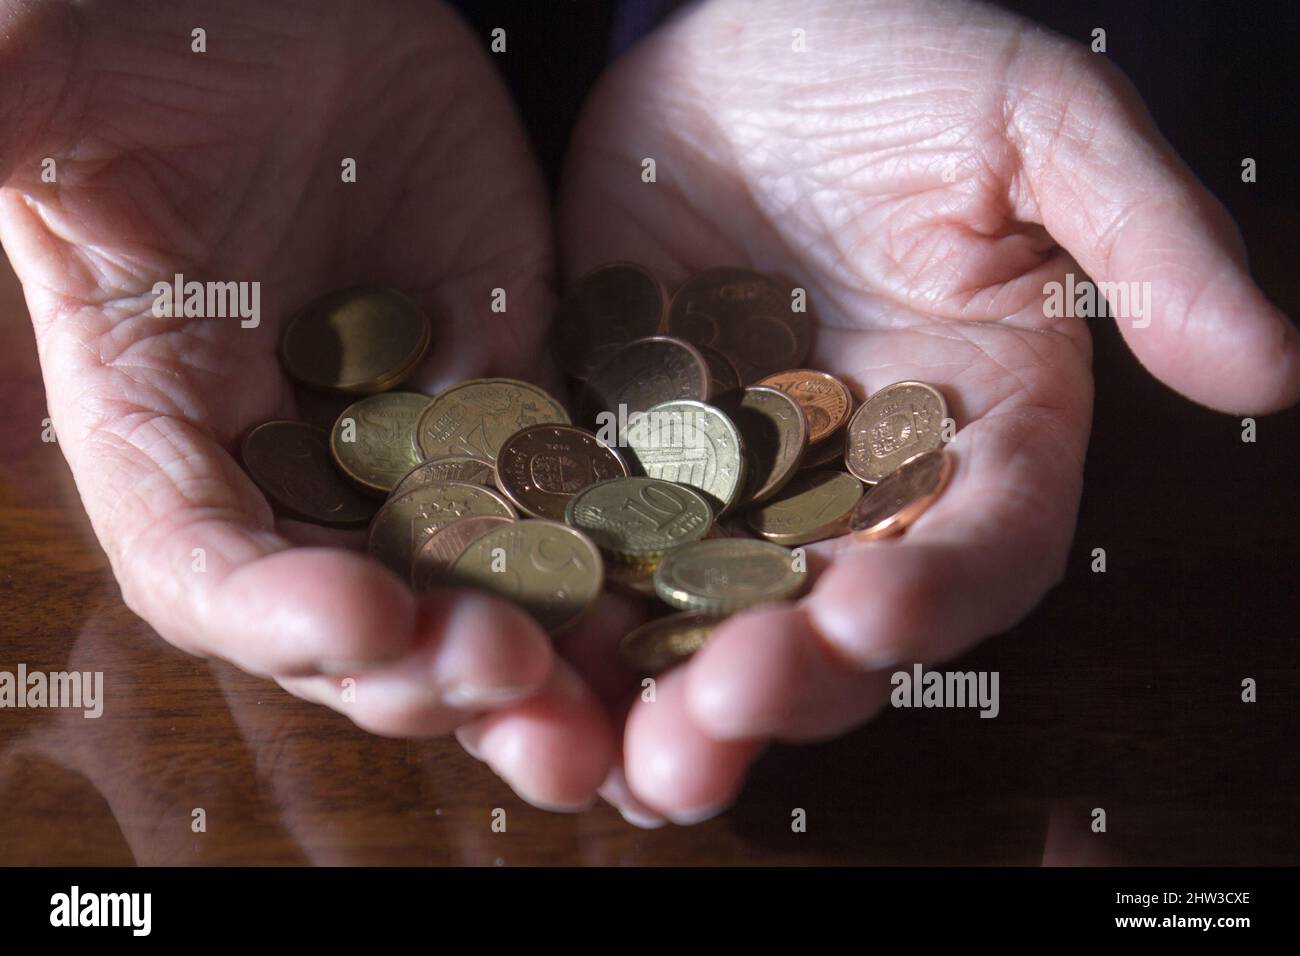 Manos arrugadas de ancianas contando monedas Foto de stock